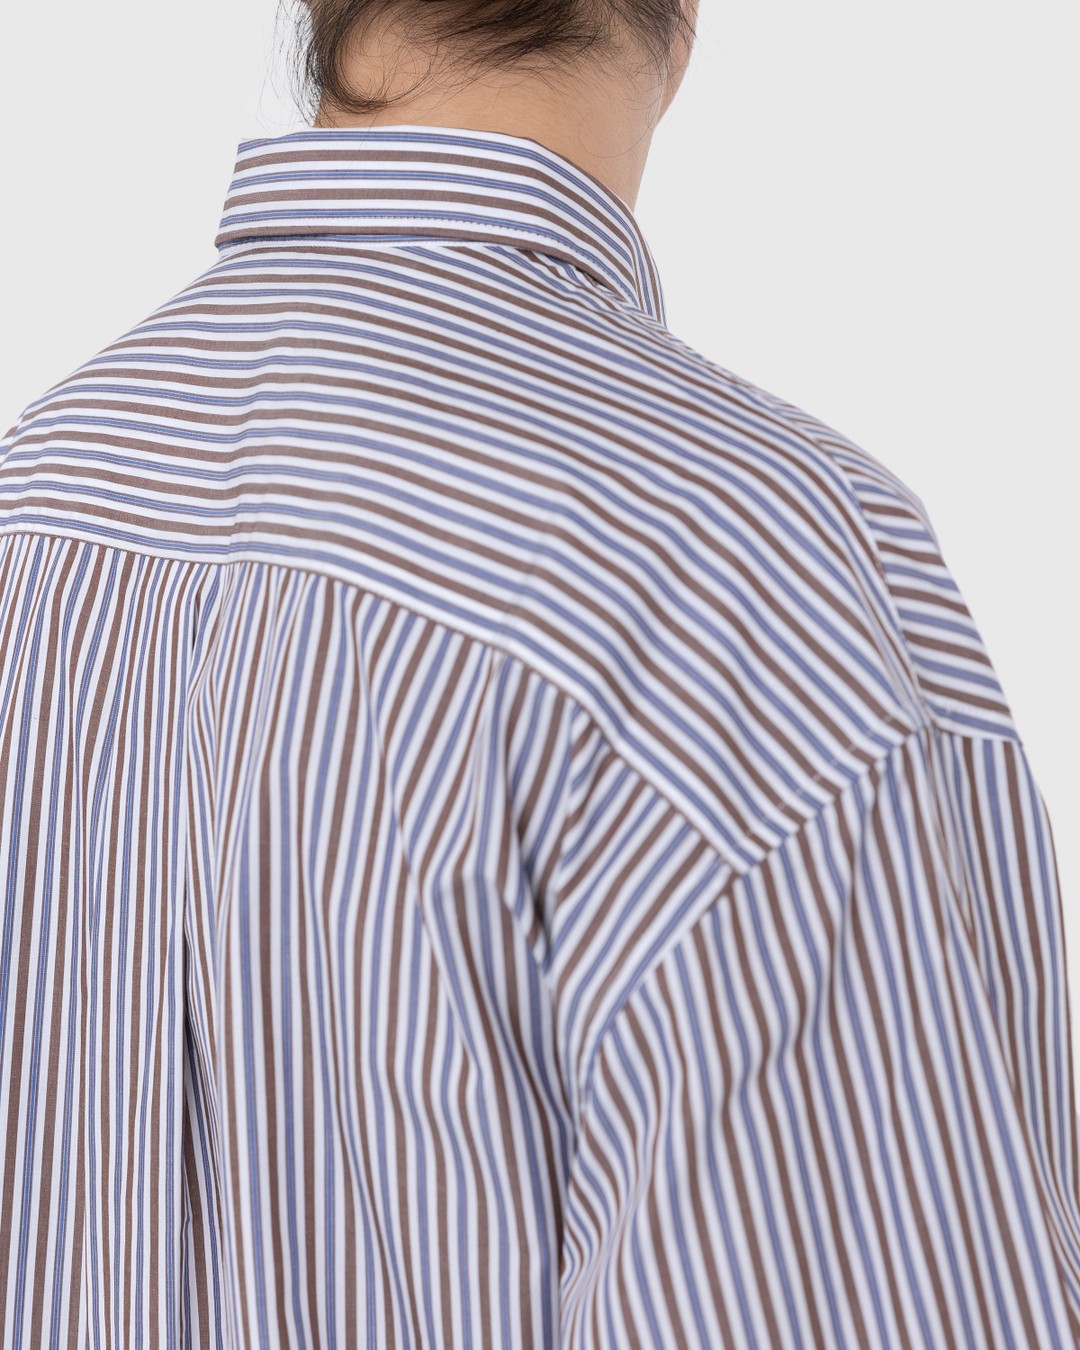 Highsnobiety – Striped Dress Shirt White/Black - Longsleeve Shirts - Multi - Image 5